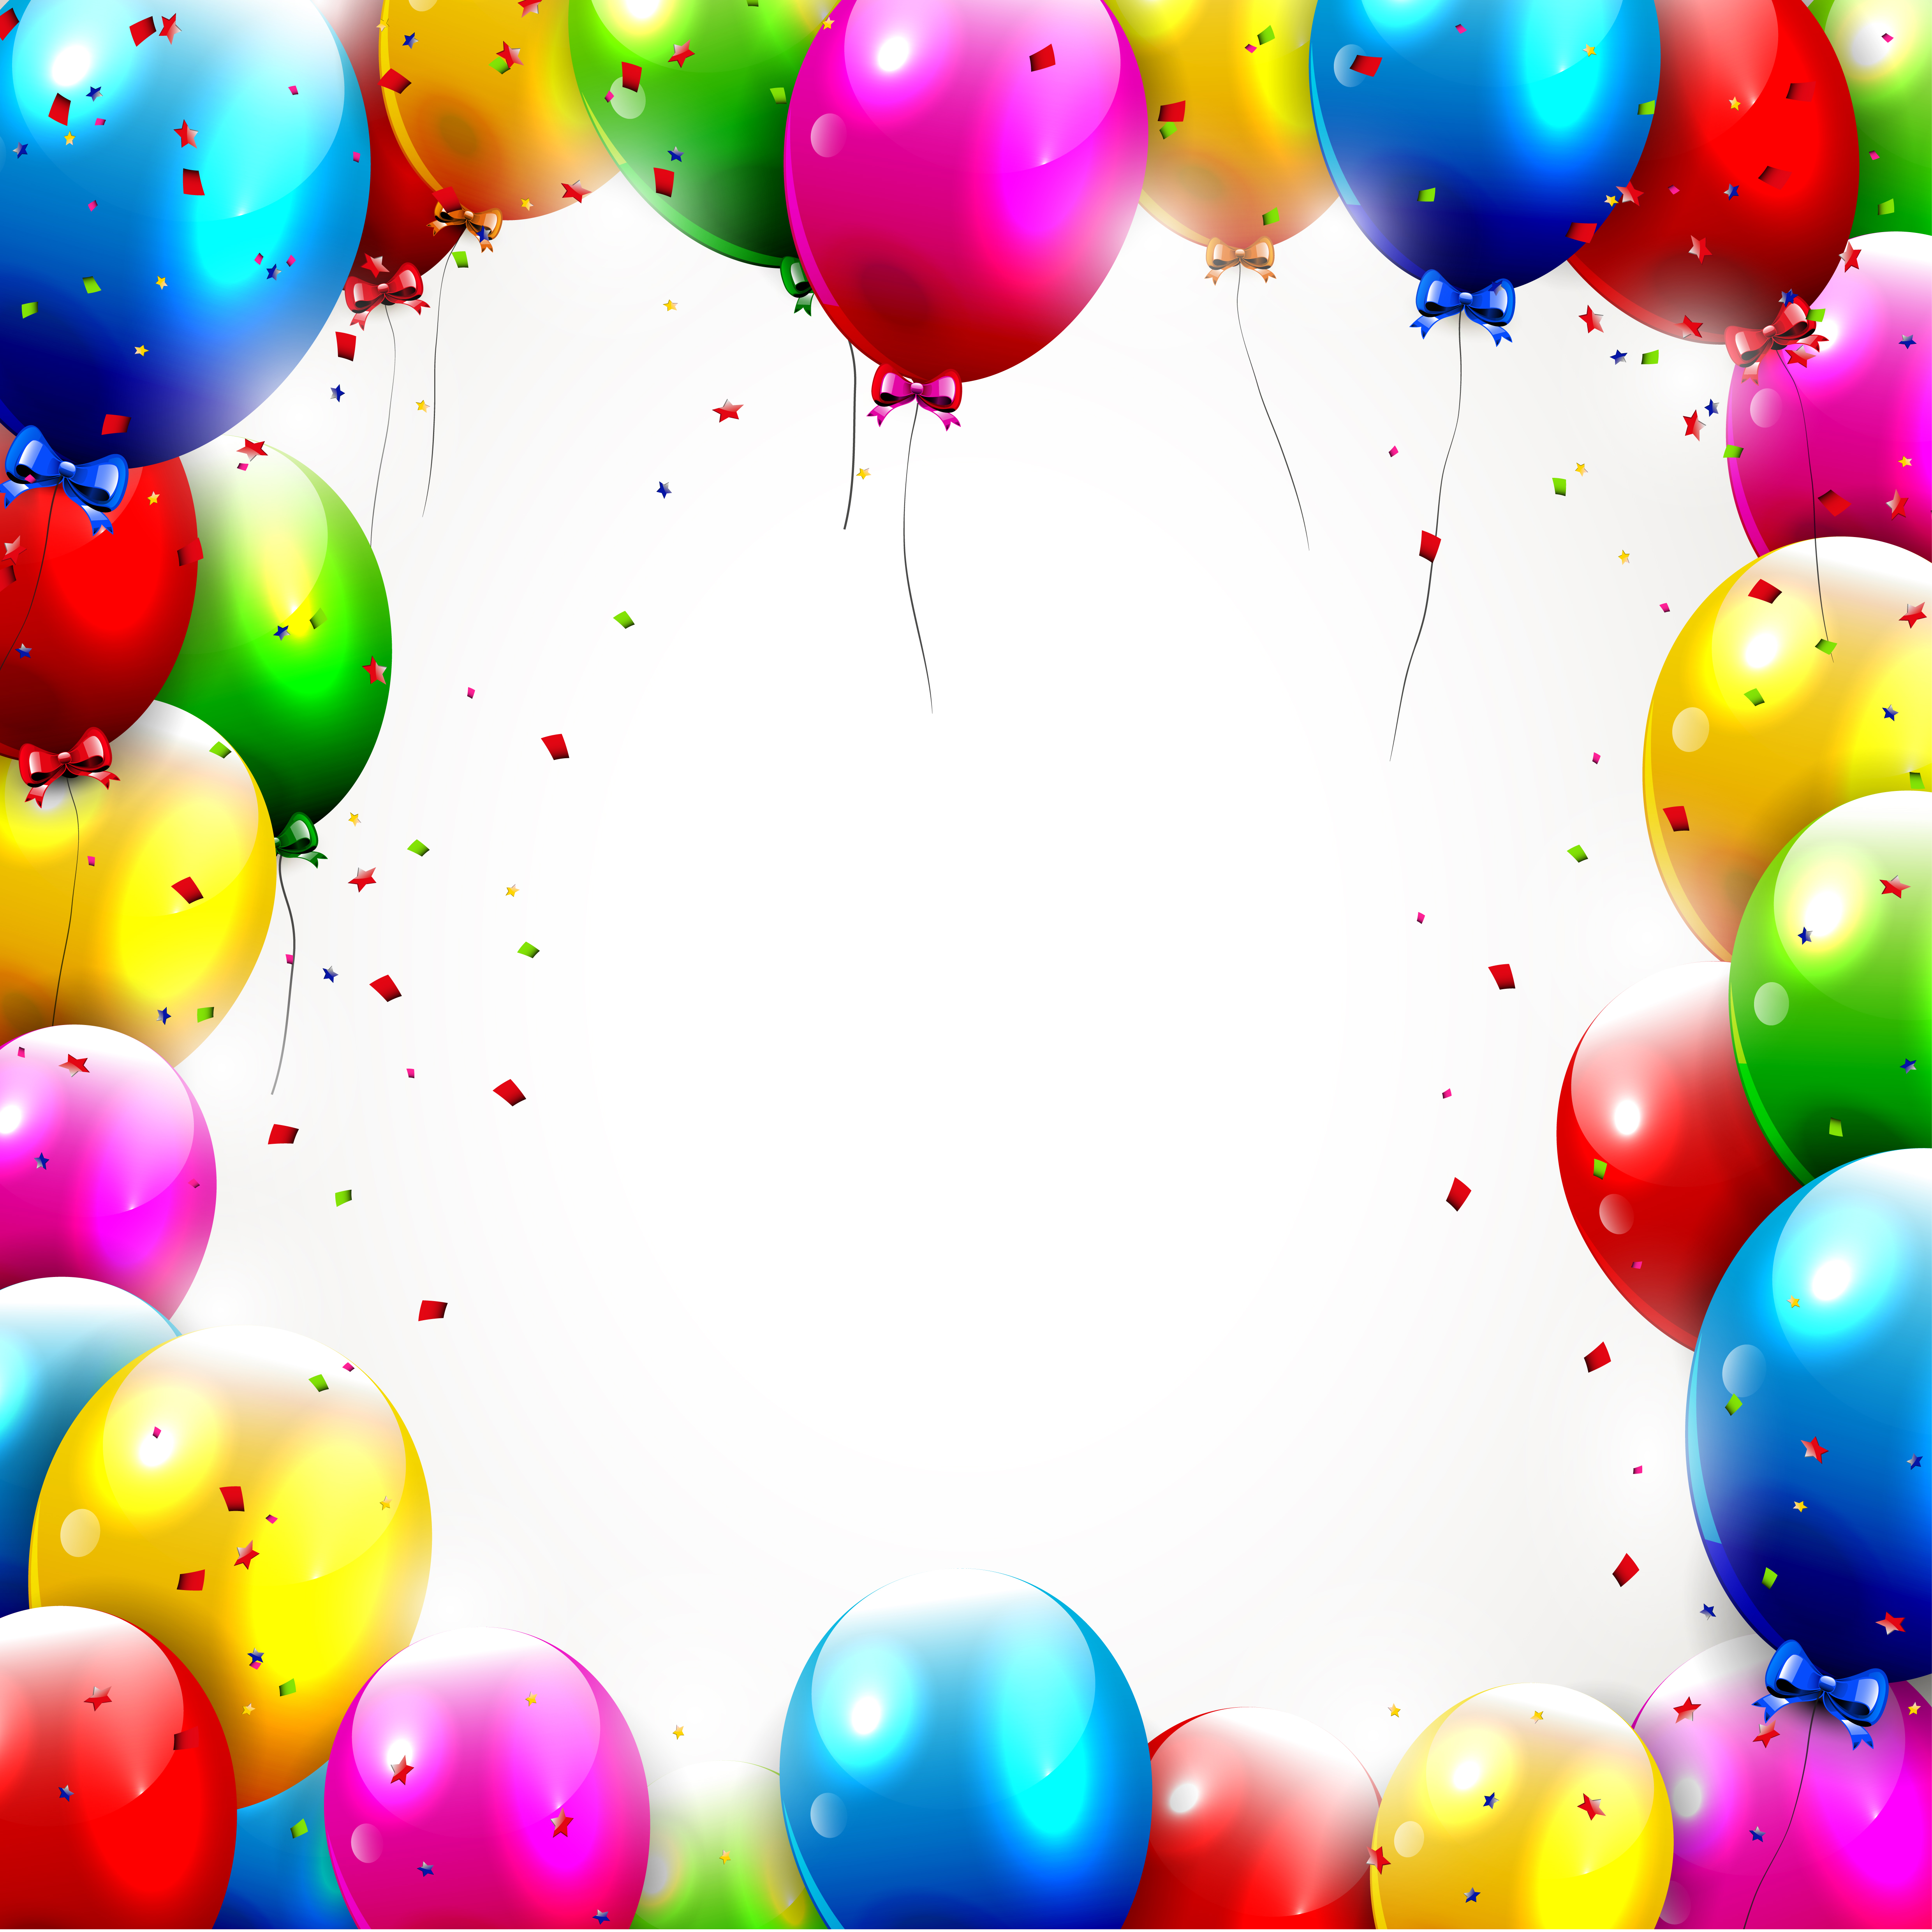 Воздушные шары \ Stock: Birthday background with balloons » Векторные  клипарты, текстурные фоны, бекграунды, AI, EPS, SVG